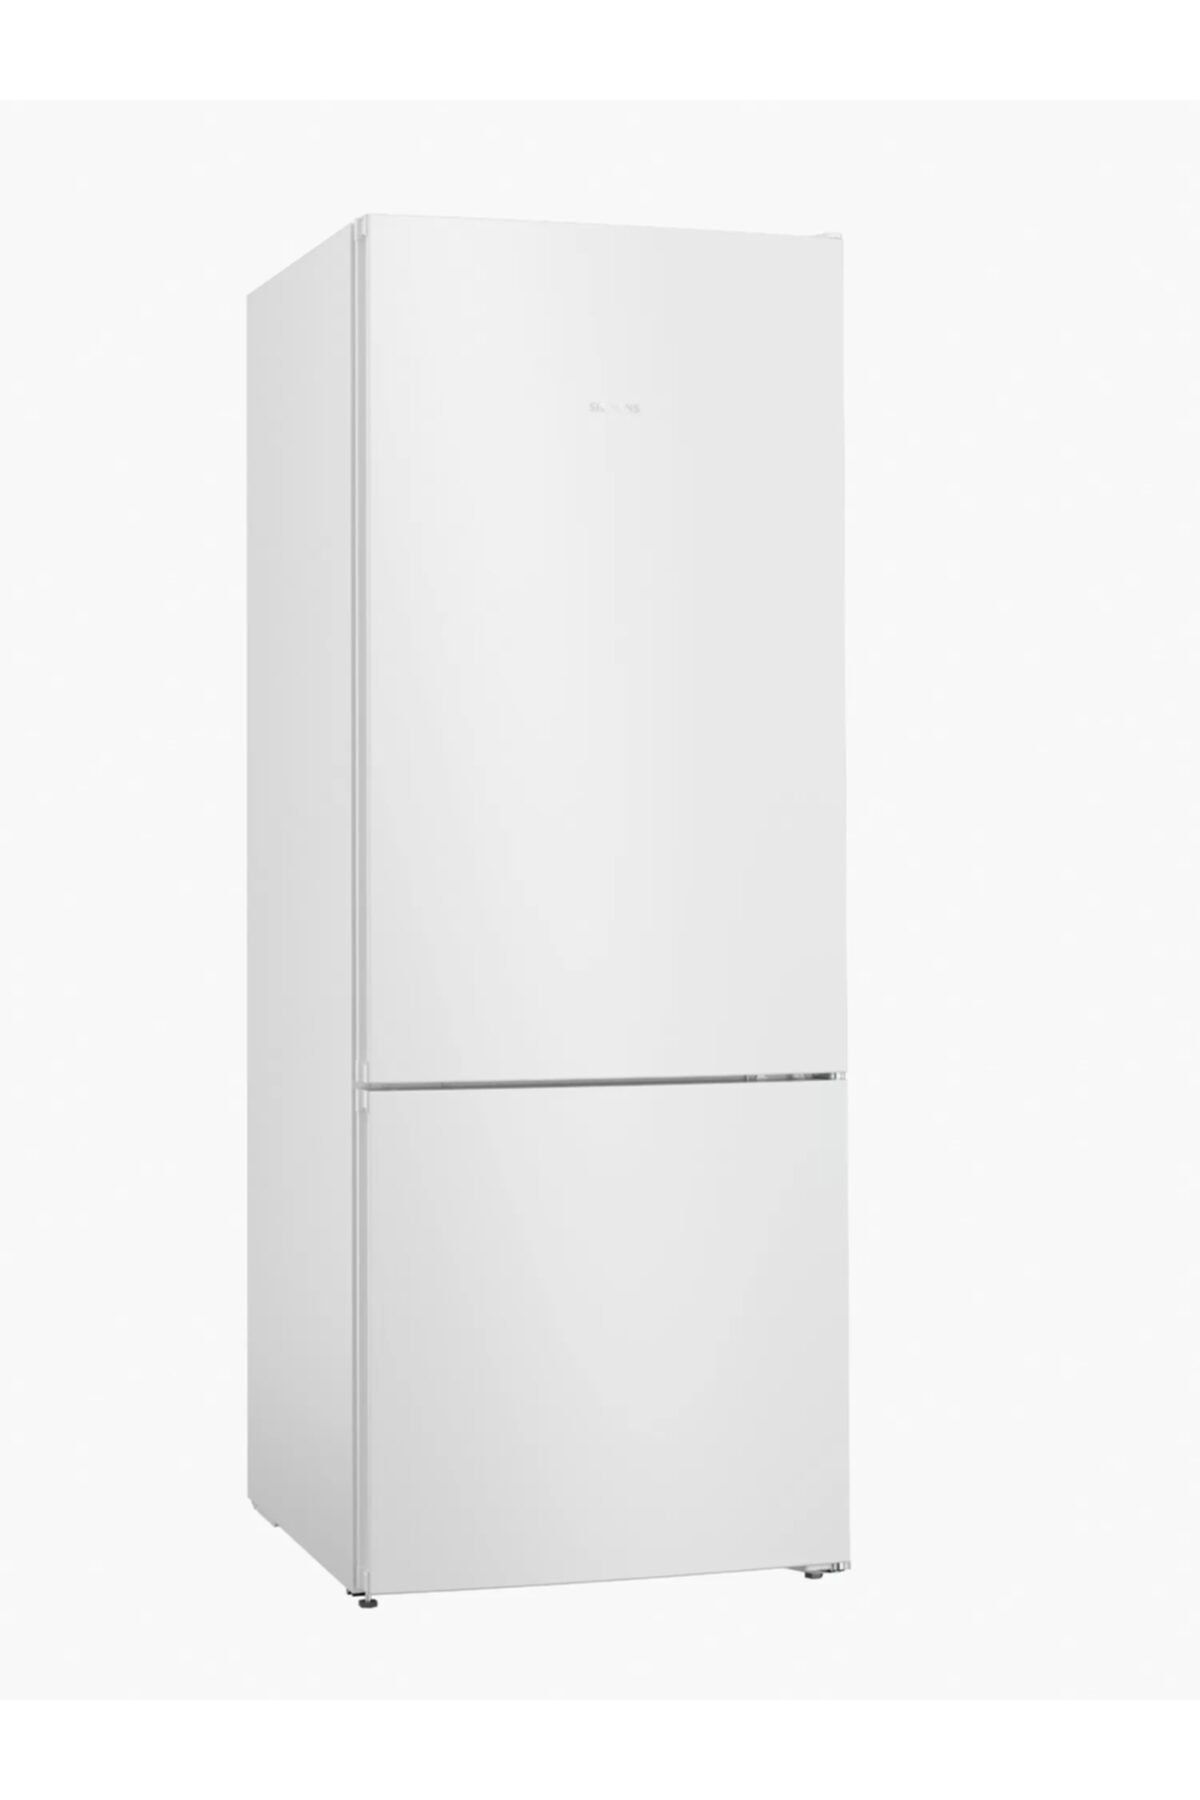 Siemens Kombi No Frost Buzdolabı Kg55nvwf0n